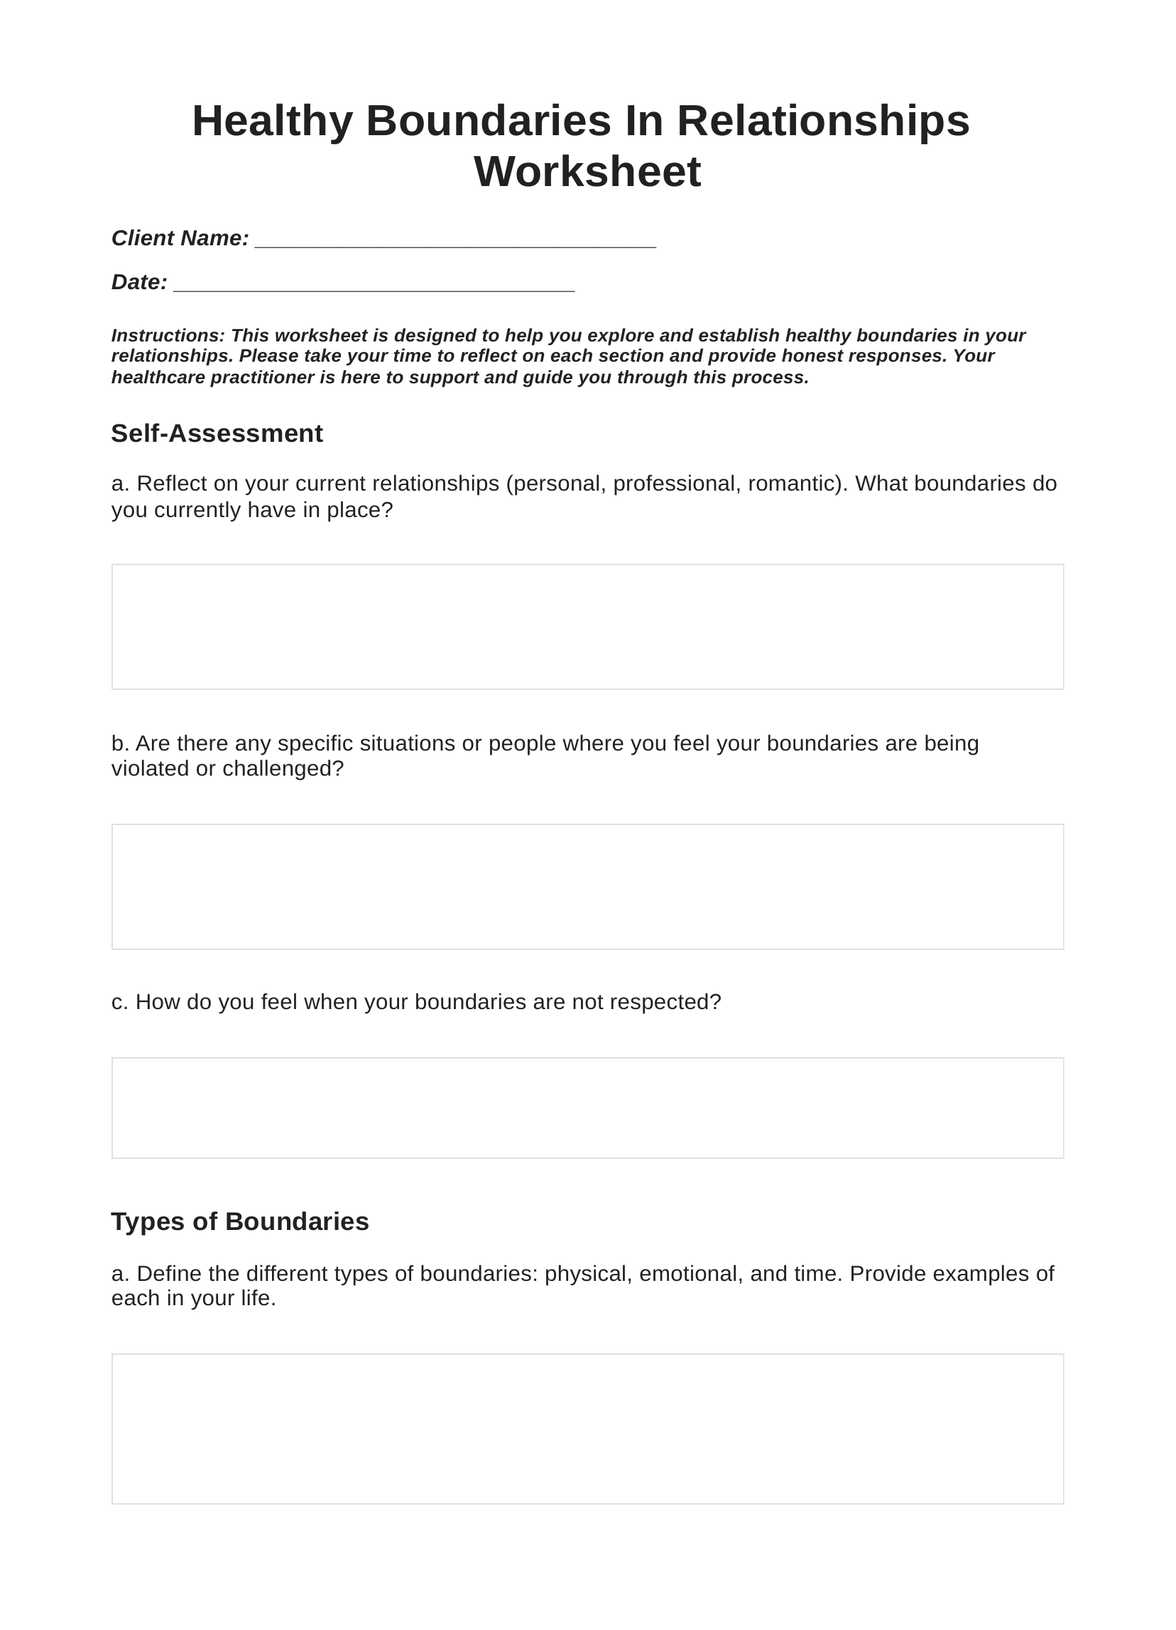 Healthy Boundaries In Relationships Worksheets PDF Example